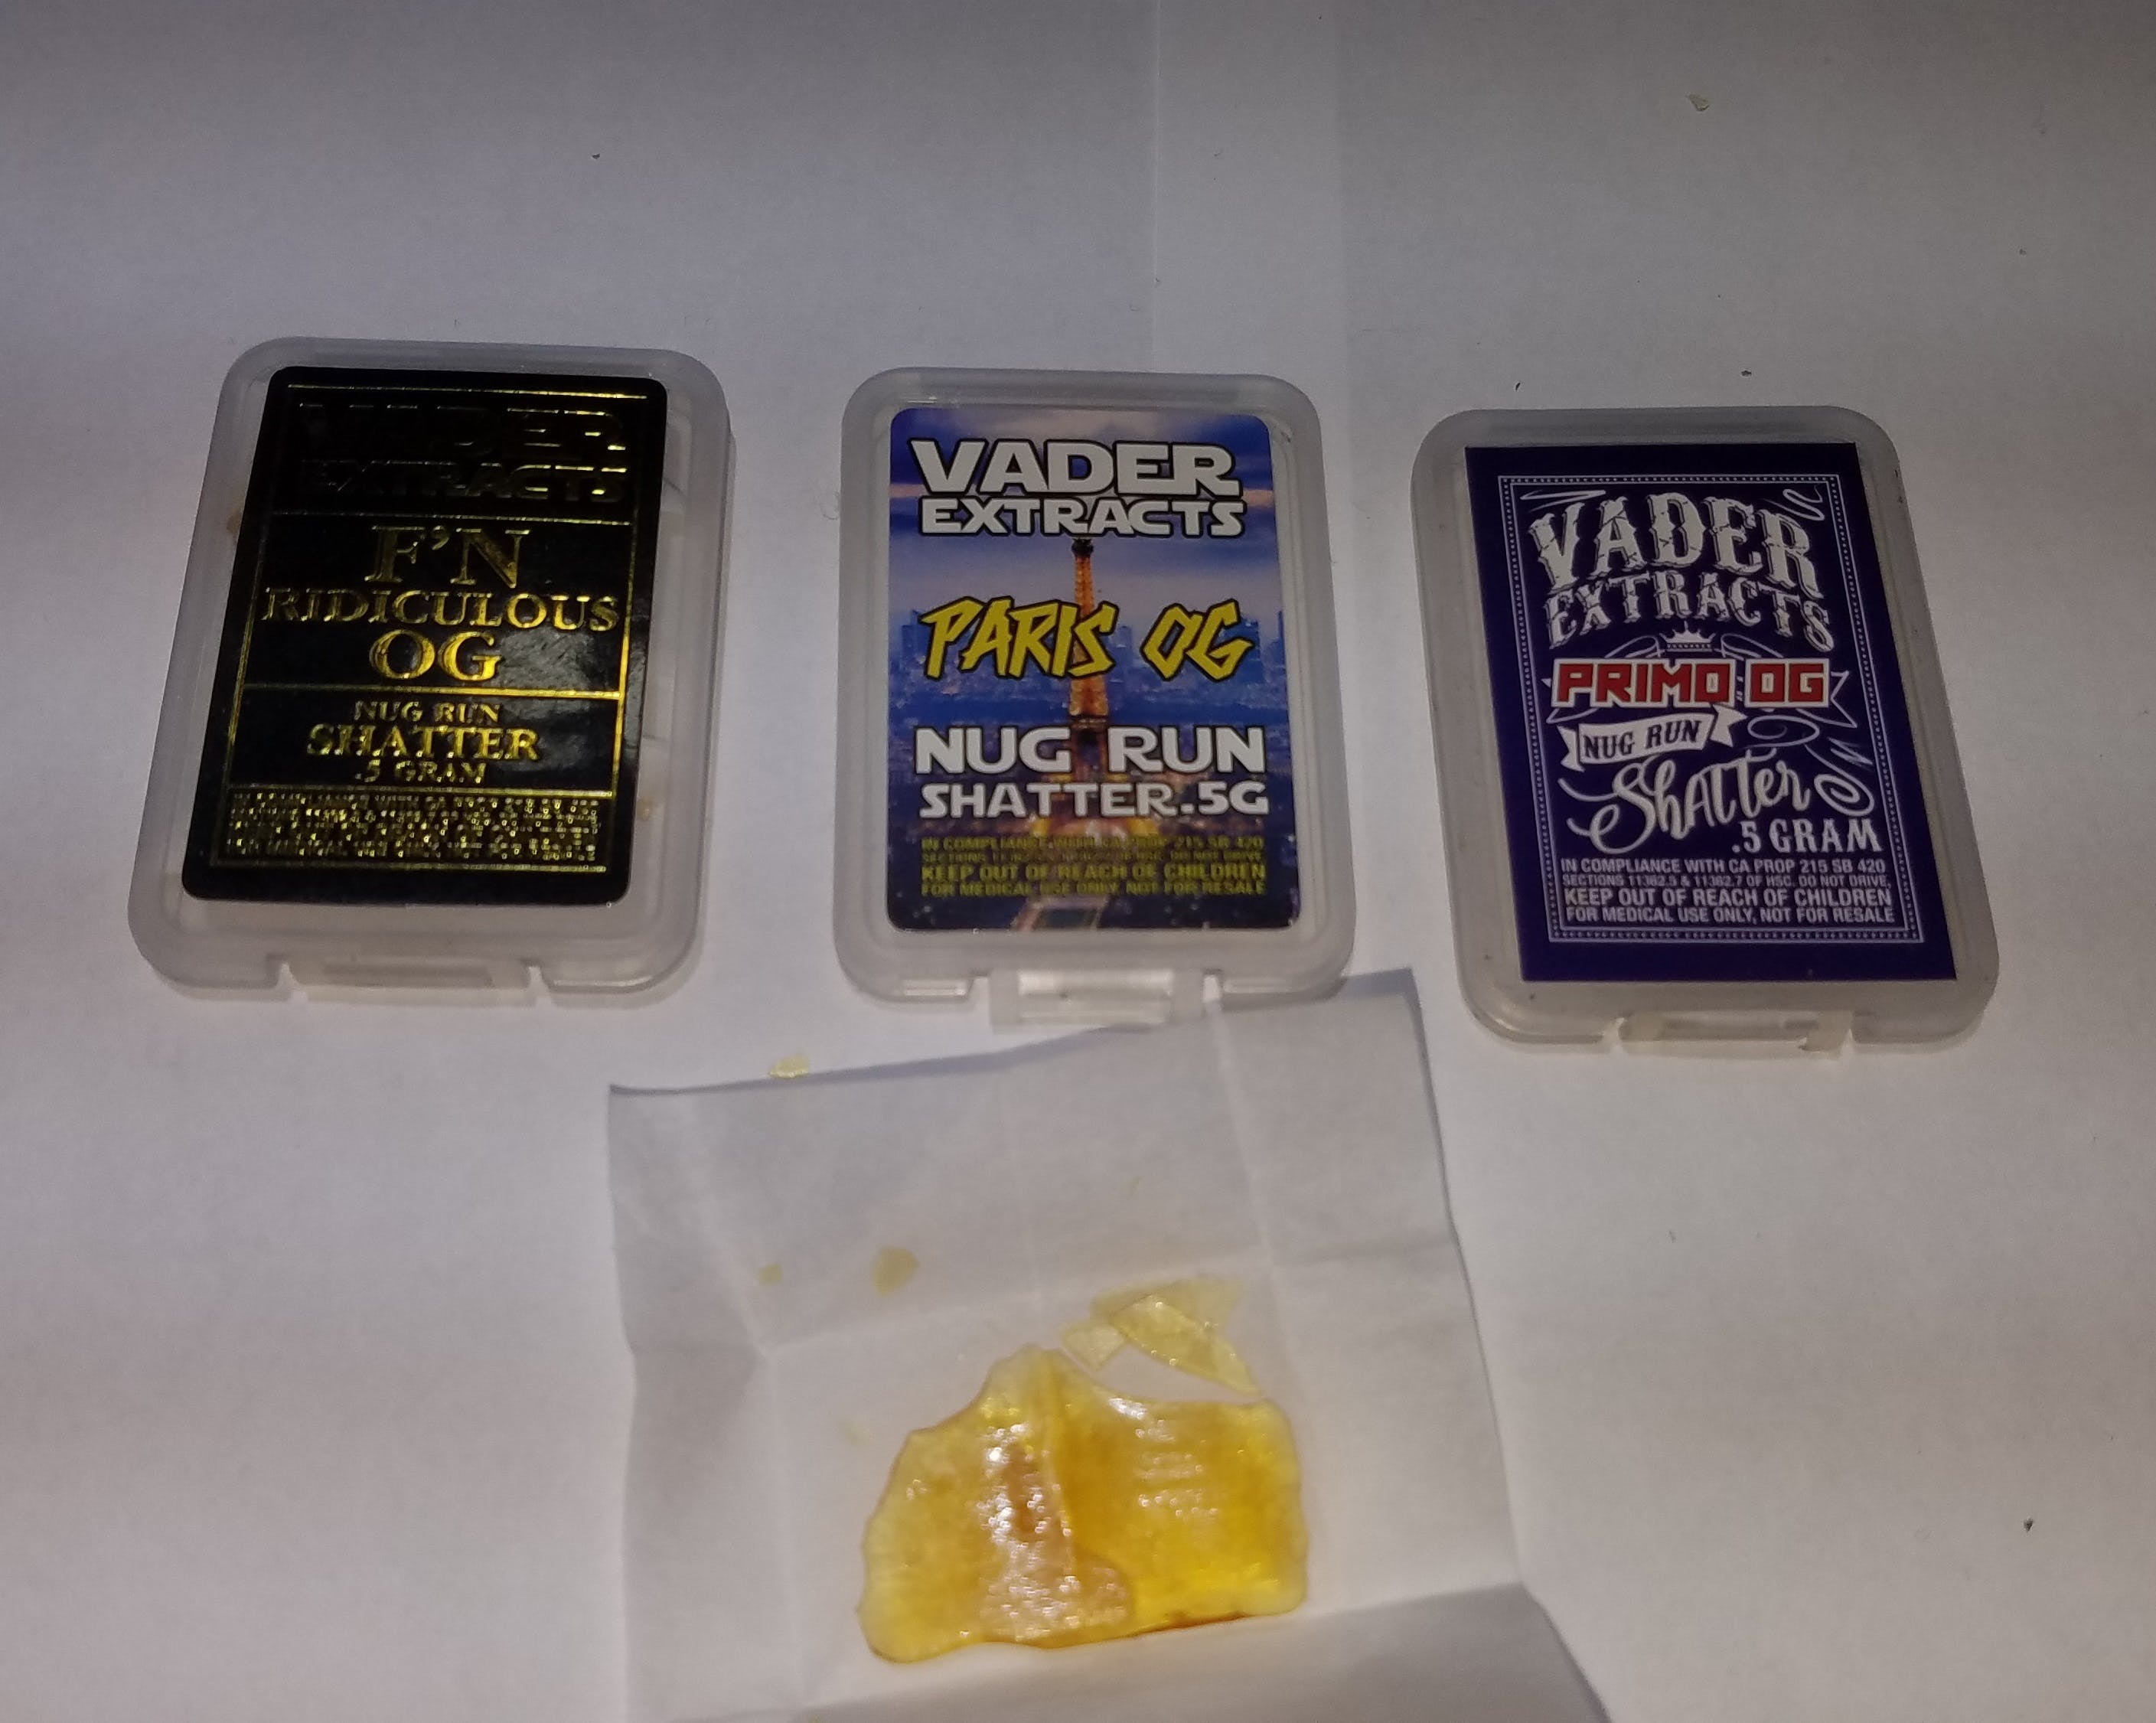 wax-vader-extracts-5g-nugrun-shatter